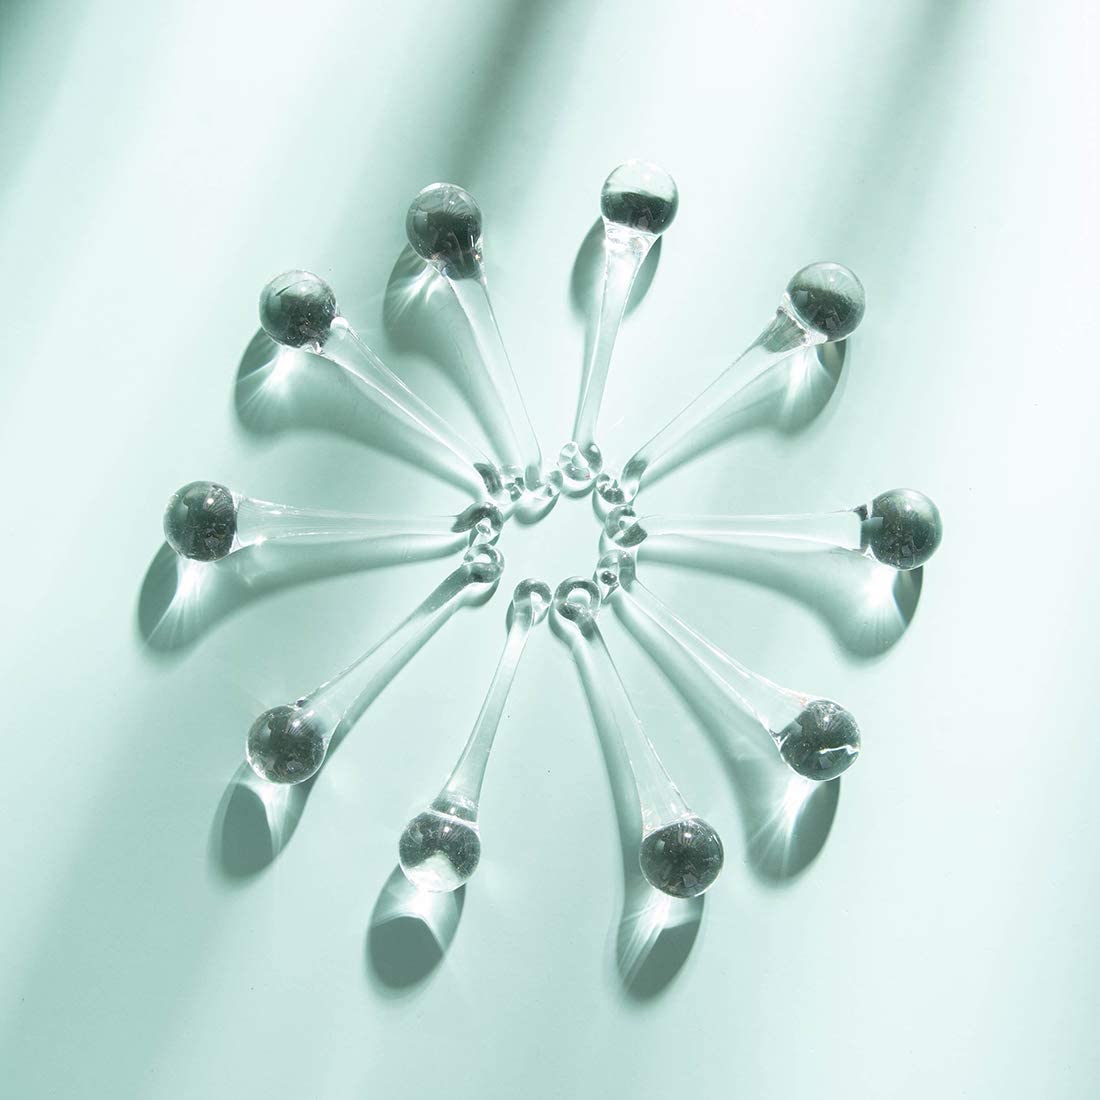 Clear Crystal Teardrop Shaped Pendant Ornaments for Chandelier (20 pcs)